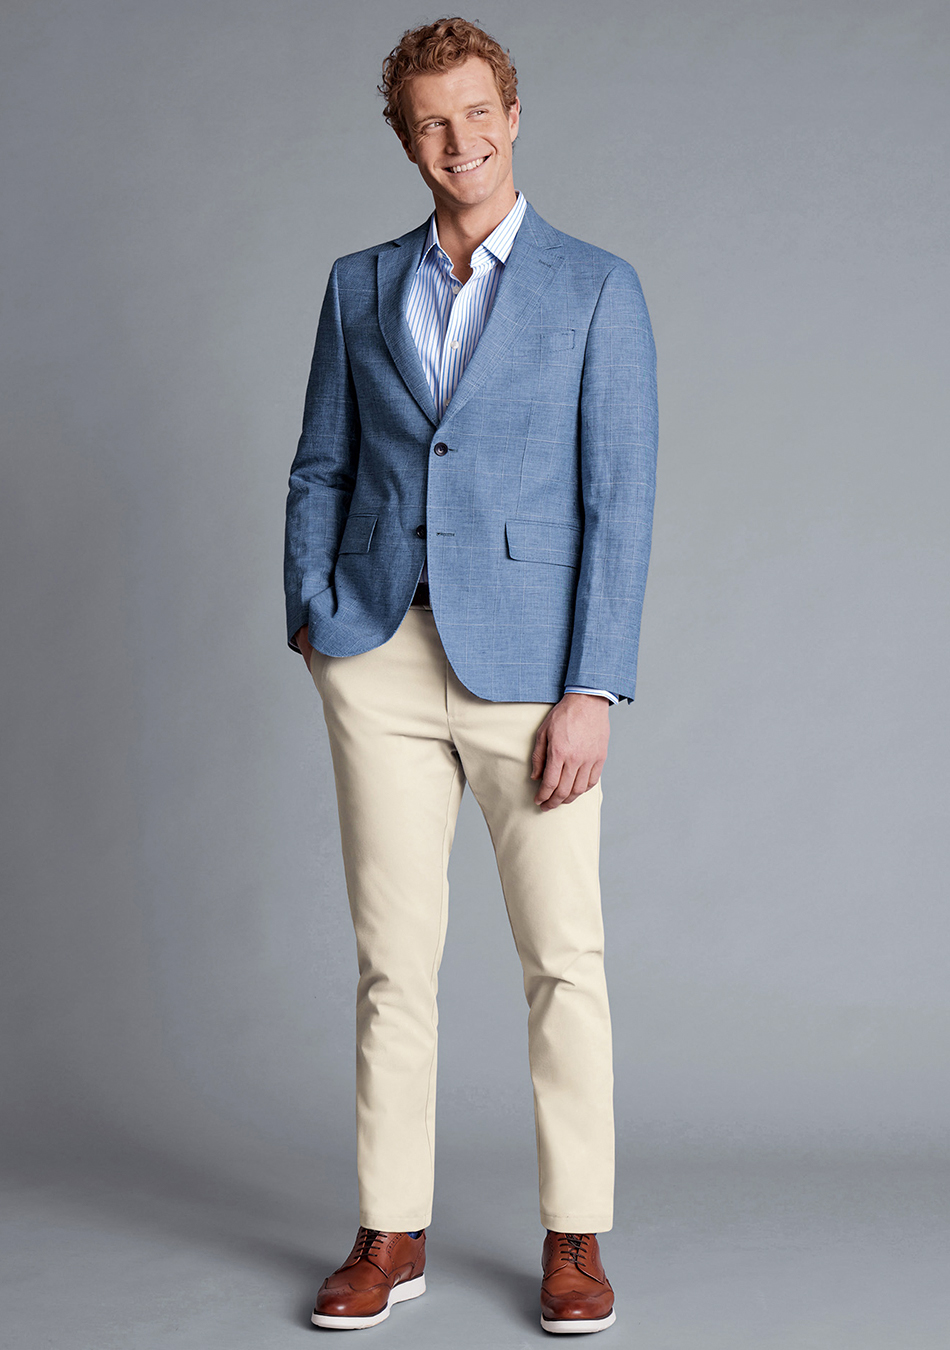 Light blue blazer, striped tie, and tan pants